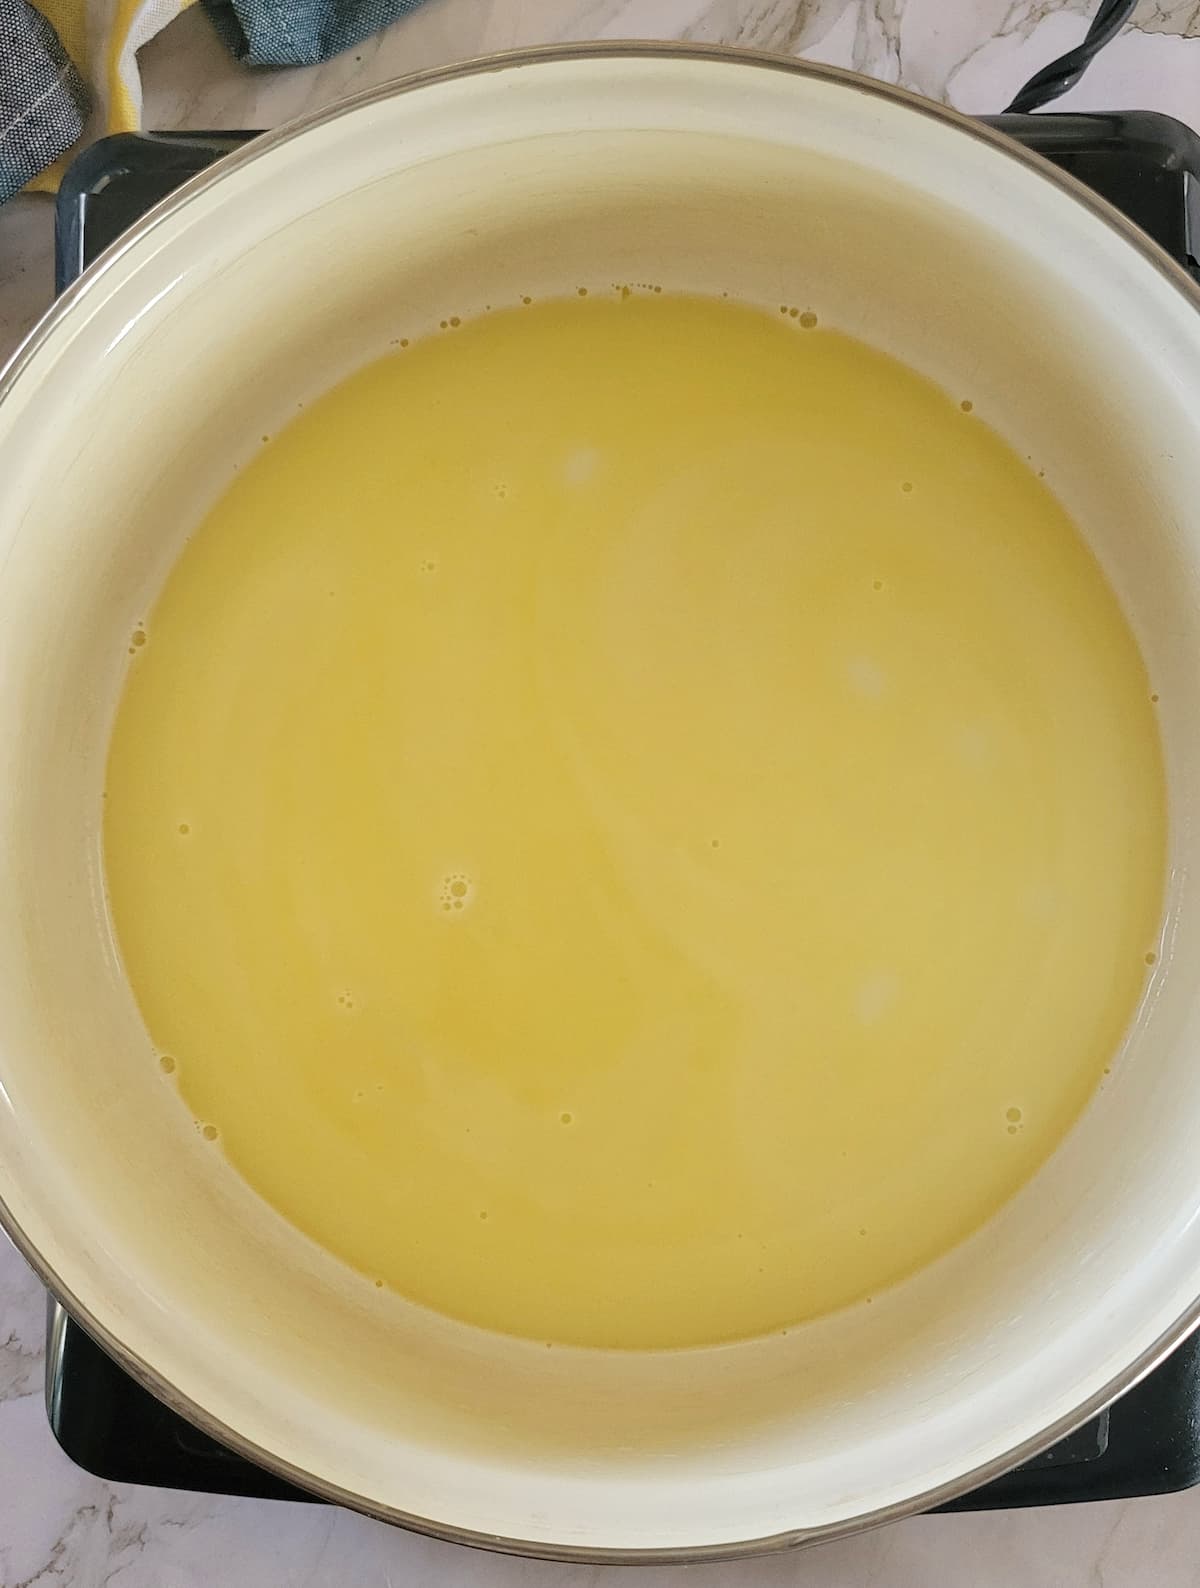 condensed milk in a pot on a burner